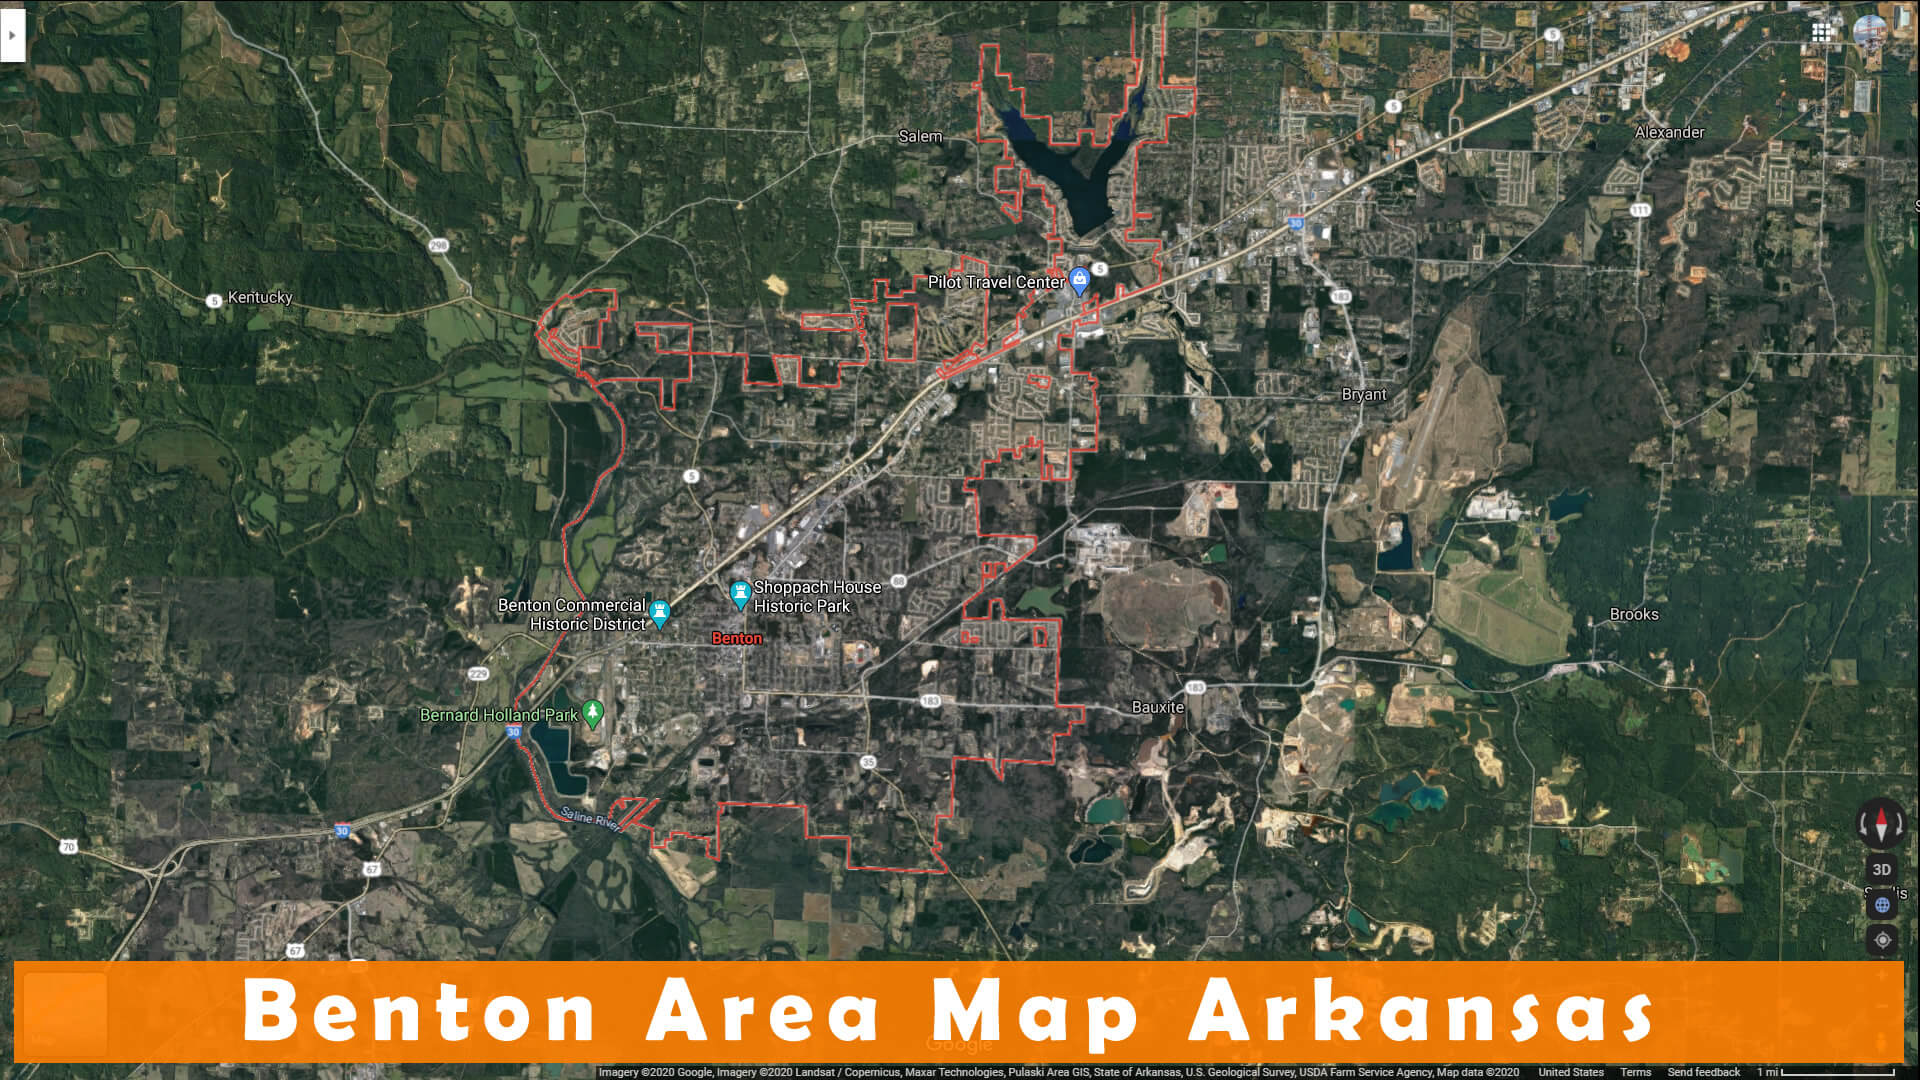 Benton Area Map Arkansas